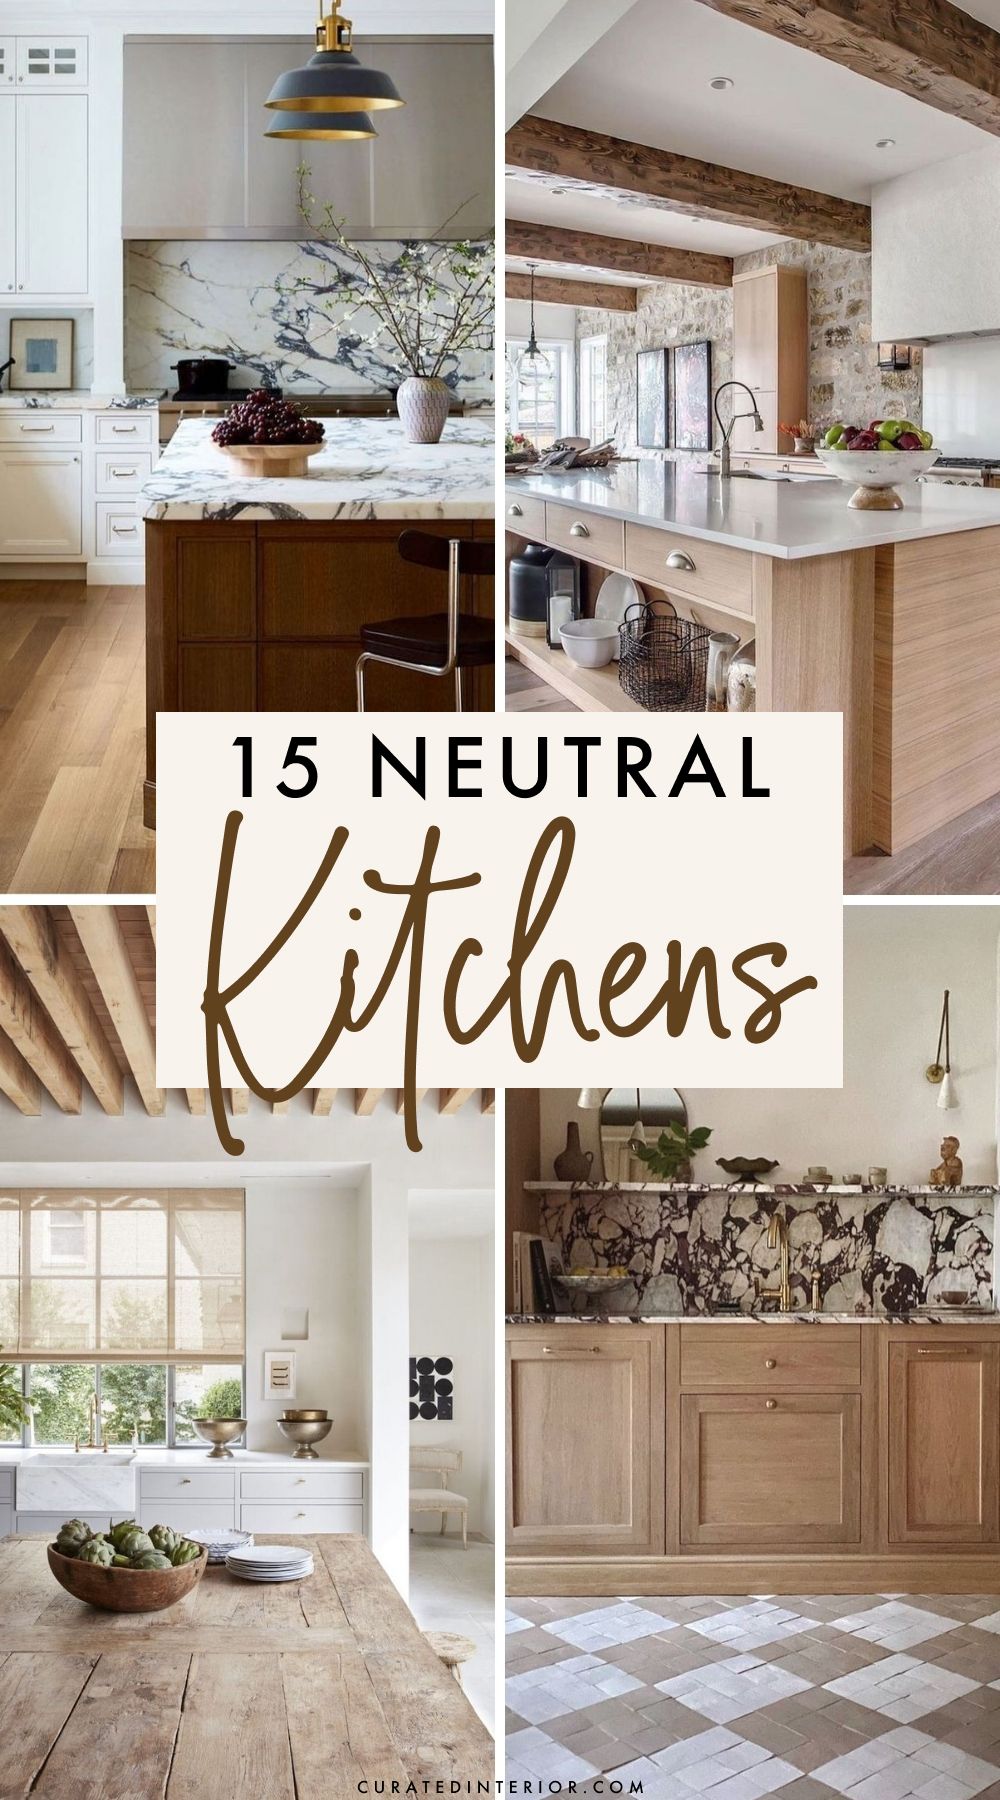 25 Stylish And Cozy Neutral Kitchens - Shelterness